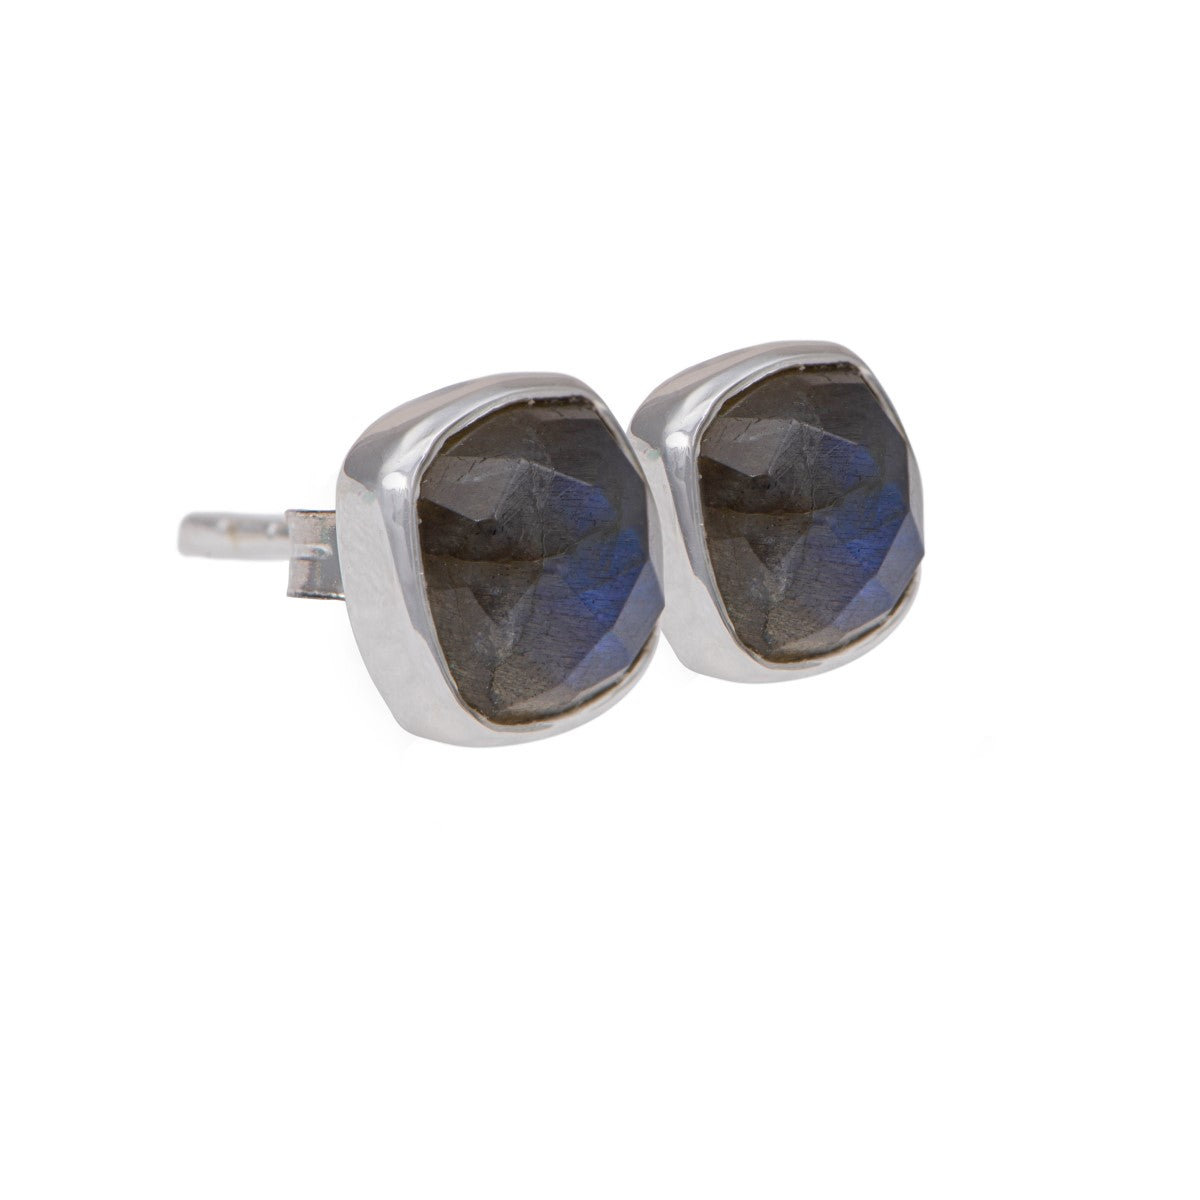 Faceted Square Labradorite Gemstone Stud Earrings in Sterling Silver